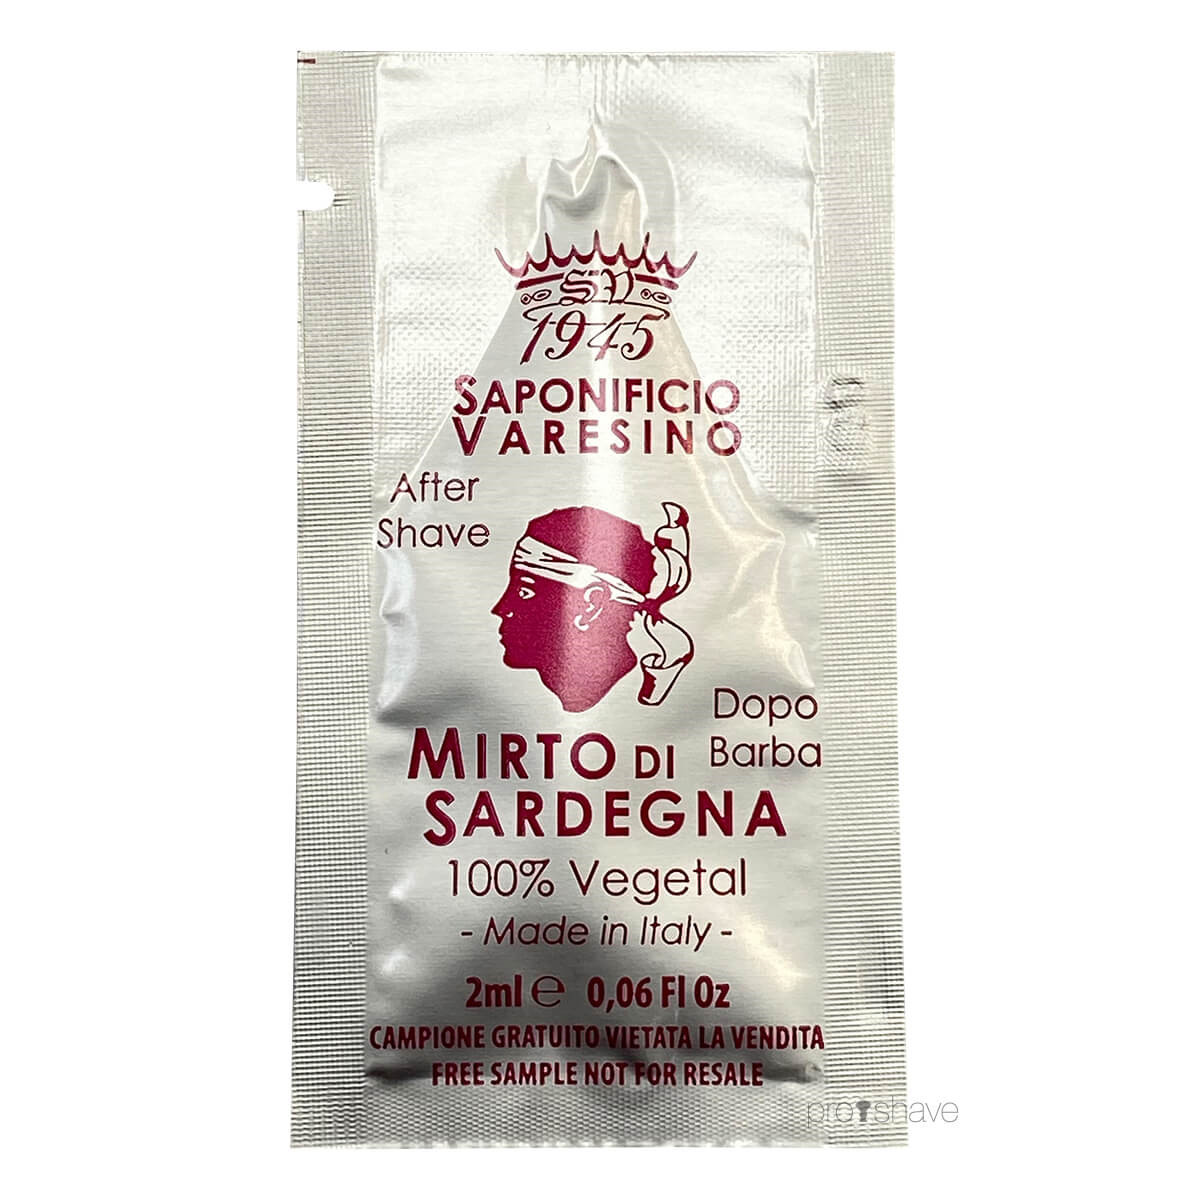 Saponificio Varesino Aftershave, Mirto di Sardegna, SAMPLE, 2 ml.